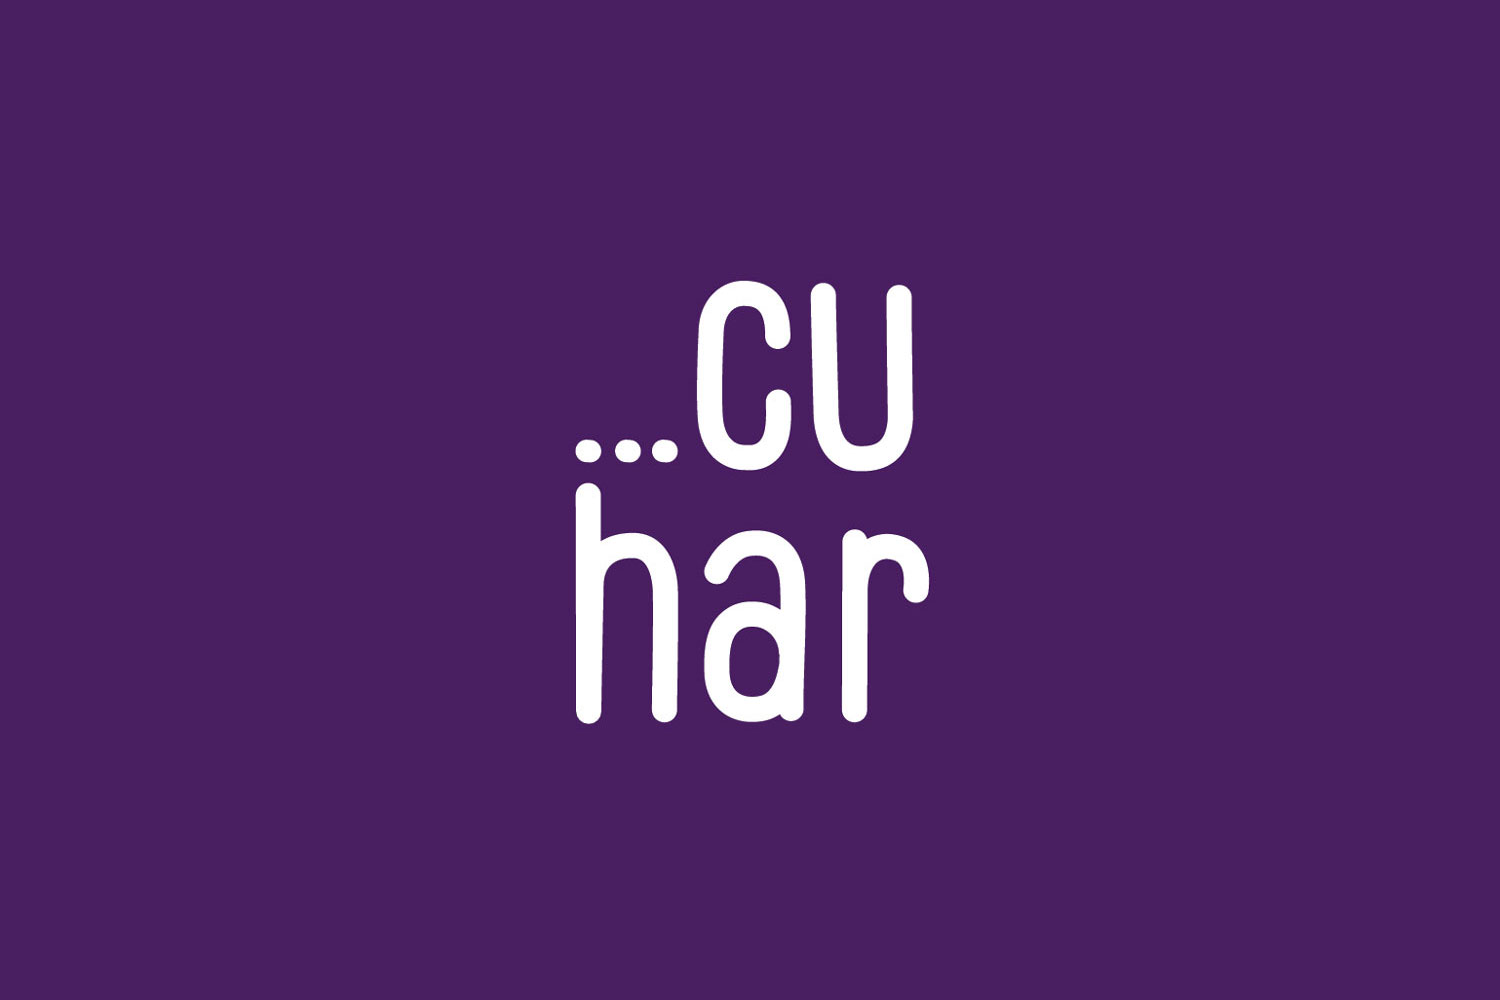 cu har logo color background by inoveo